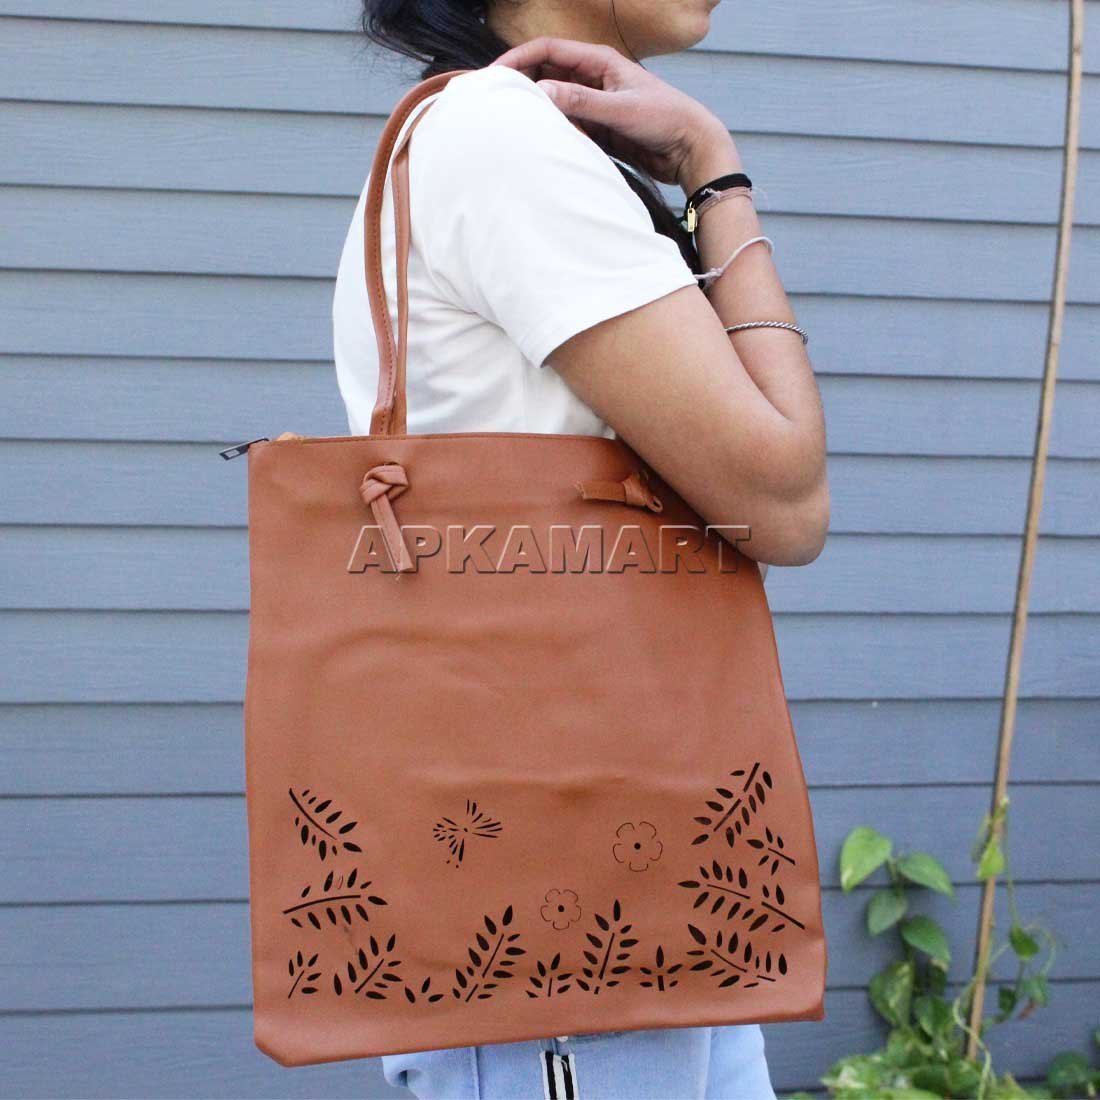 Ladies Handbags | Big Shoulder Bags for Ladies - 13 Inch - ApkaMart